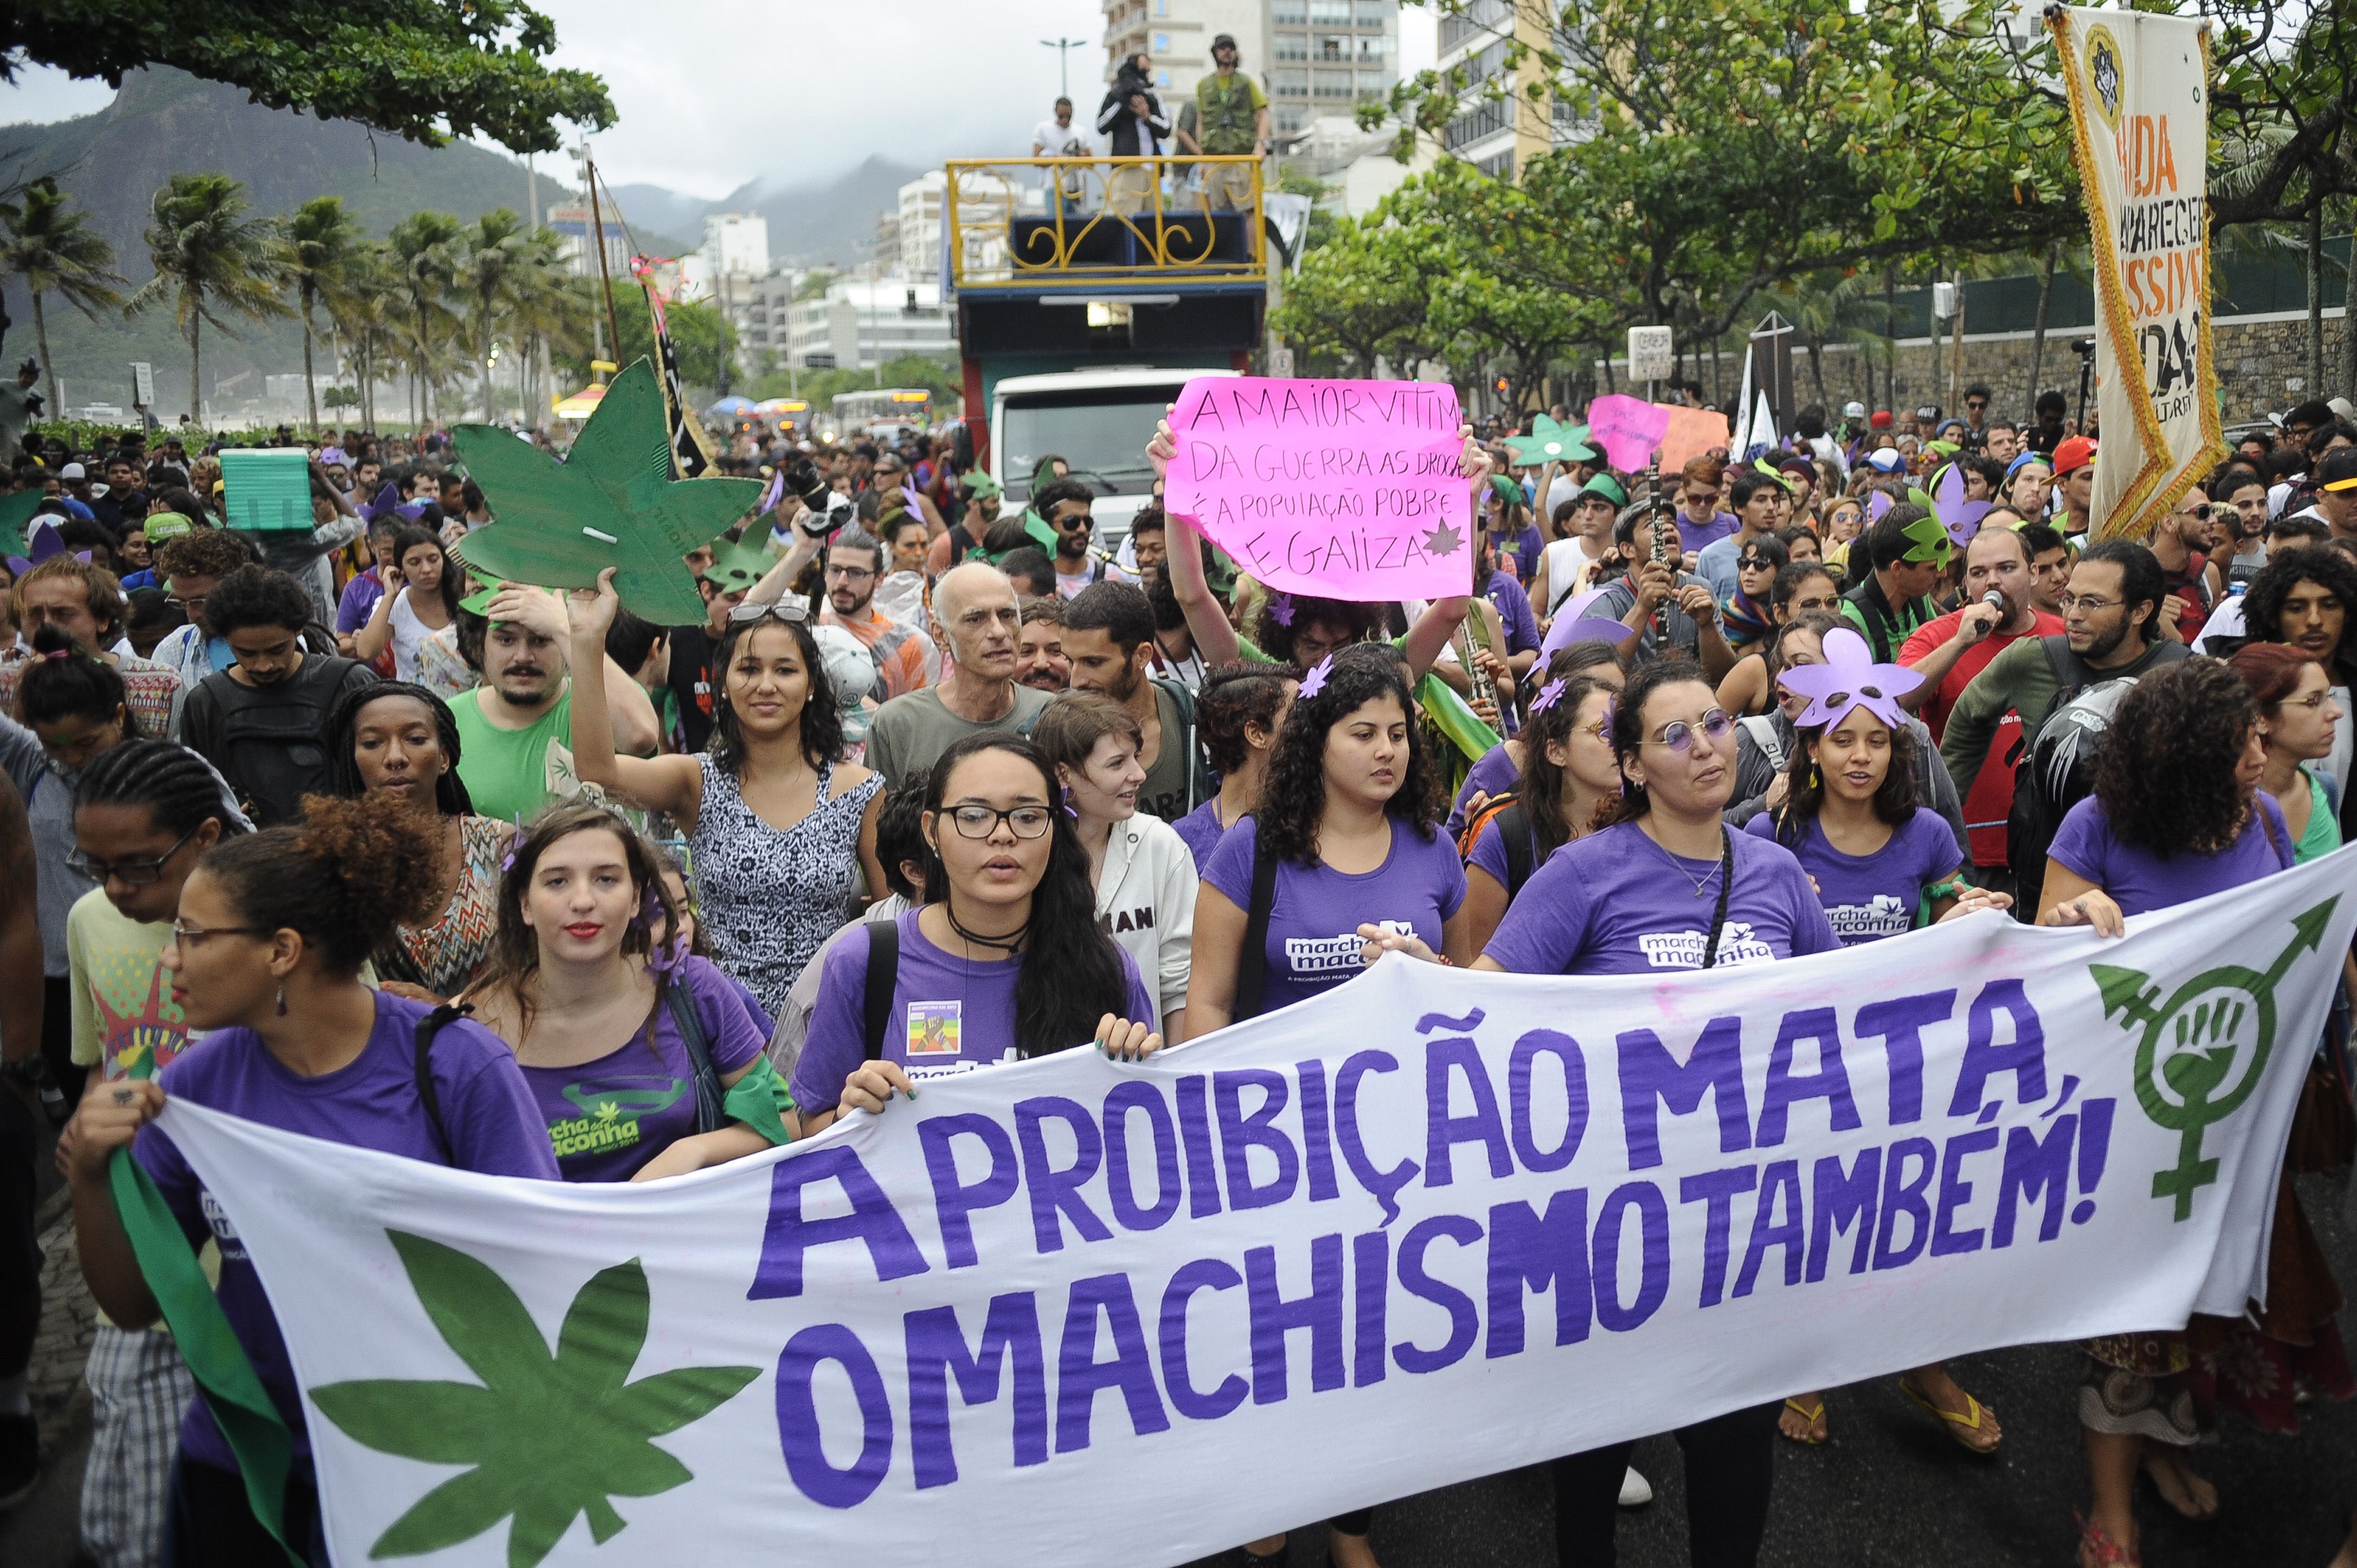 Brazil cannabis